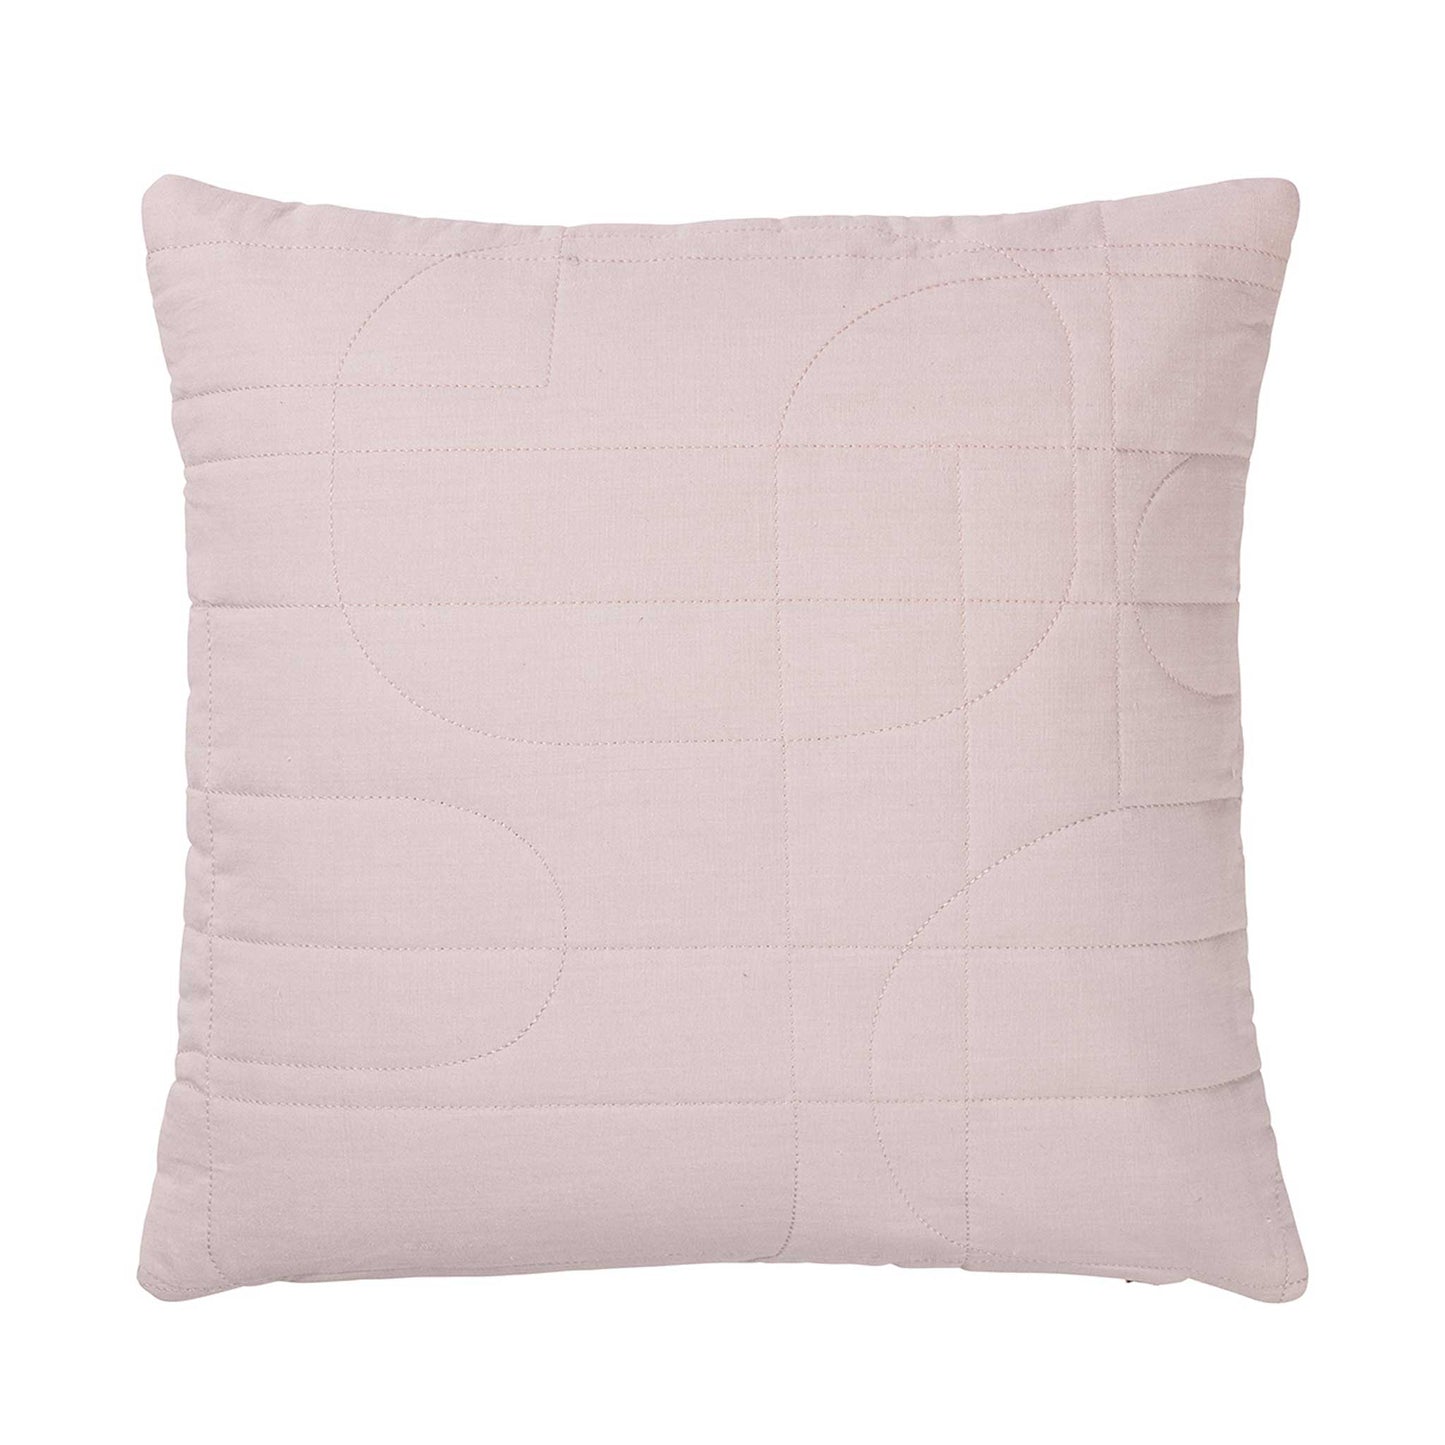 Pillowcase Stripe - several colors